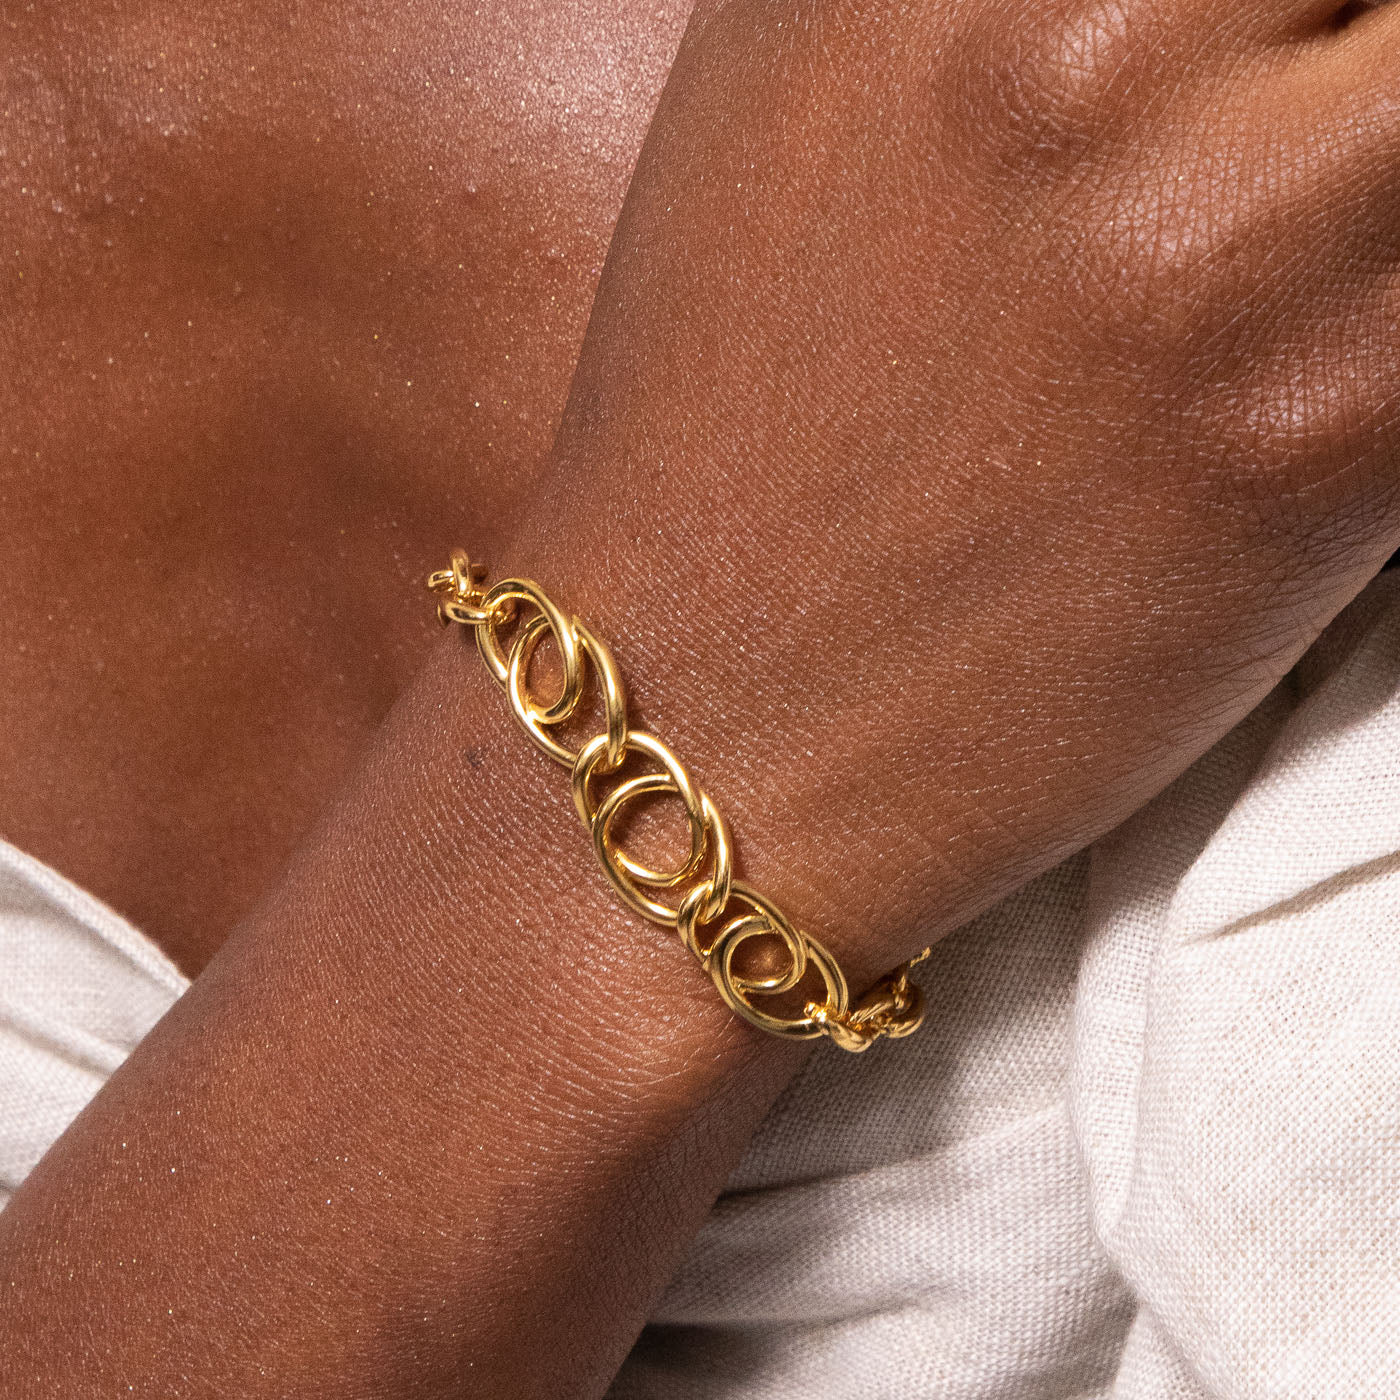 Orbit Chain Bracelet in Gold worn